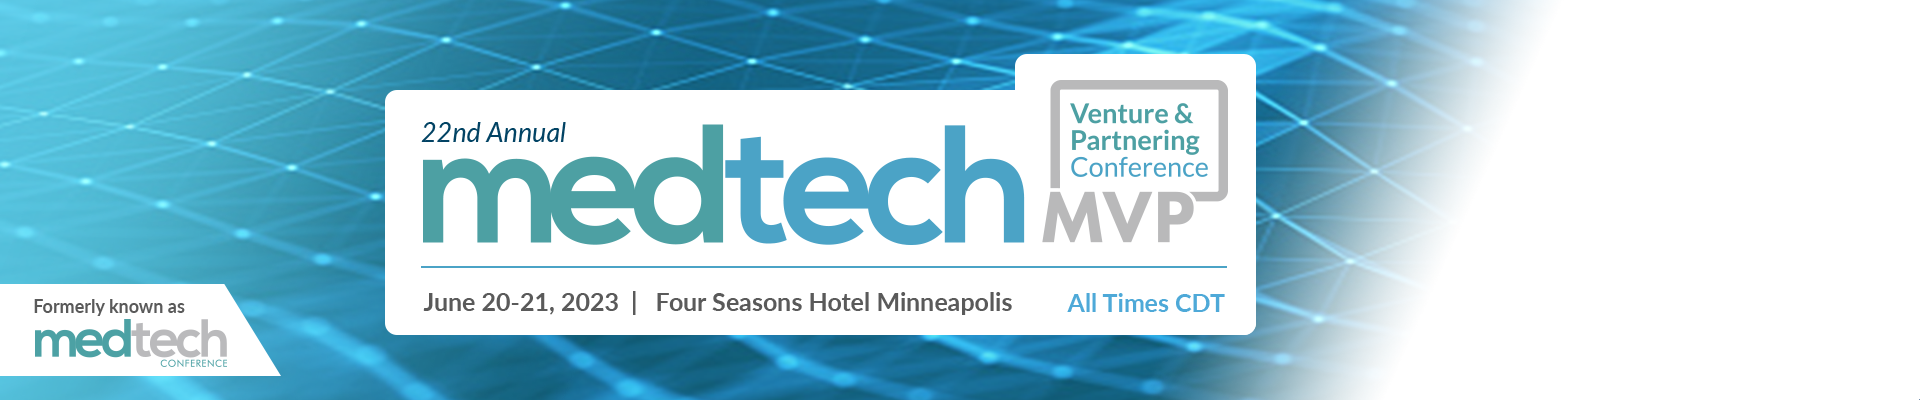 MedTech MVP - Venture & Partnering Conference, Minneapolis, Minnesota, United States